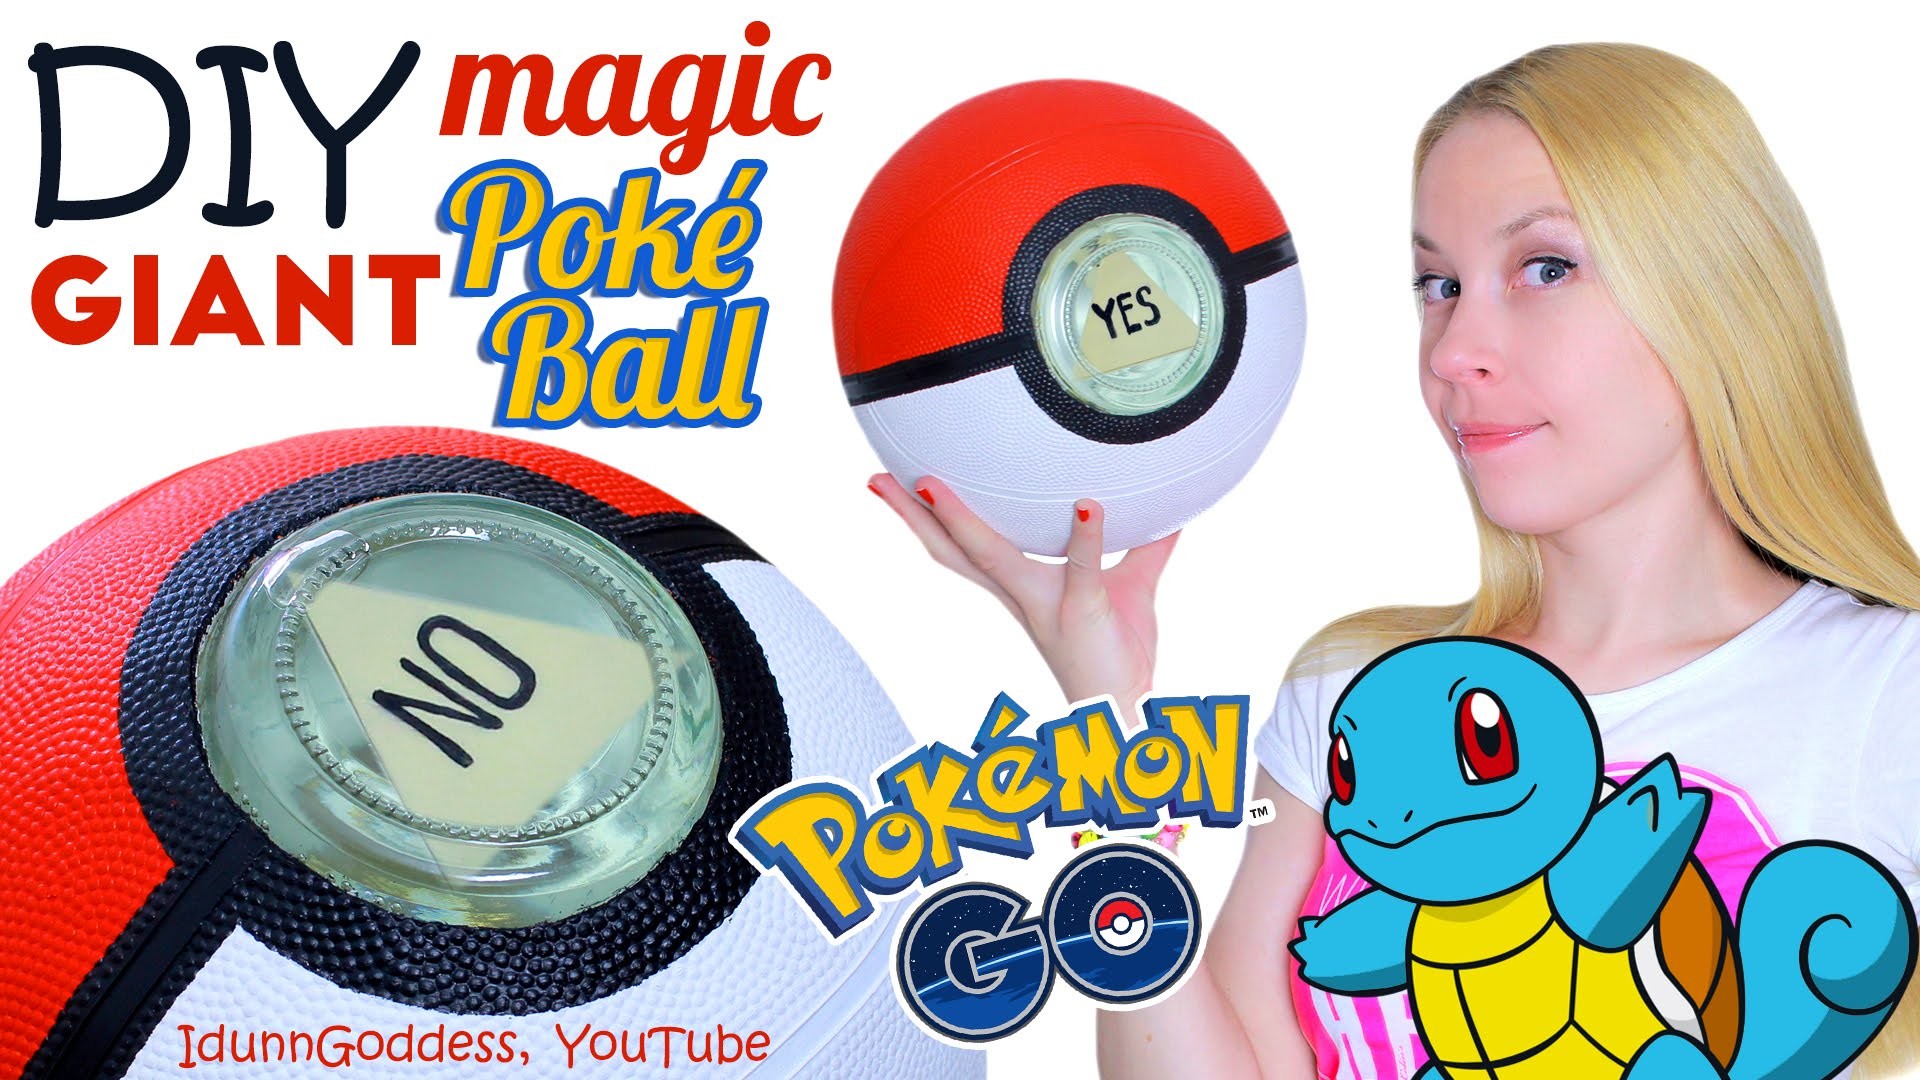 DIY GIANT Magic Poke Ball – How To Make Big Magic 8-Ball In Pokemon Go Style